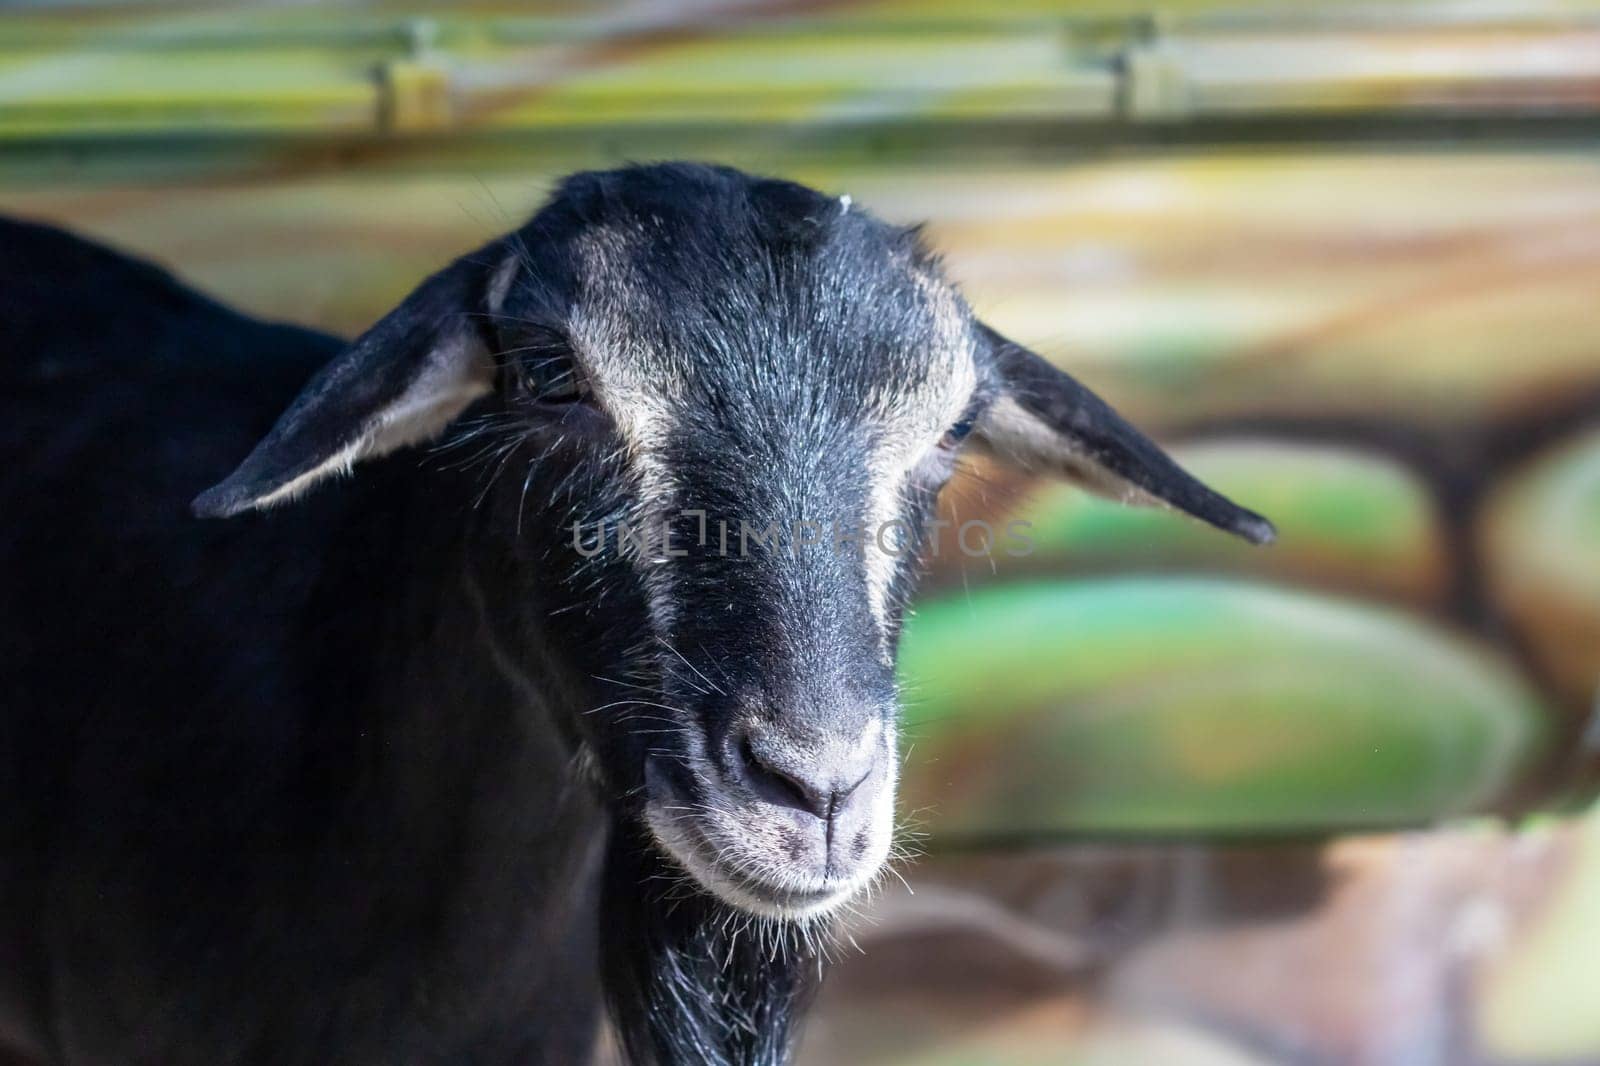 Beautiful black goat in aviary close up portrait